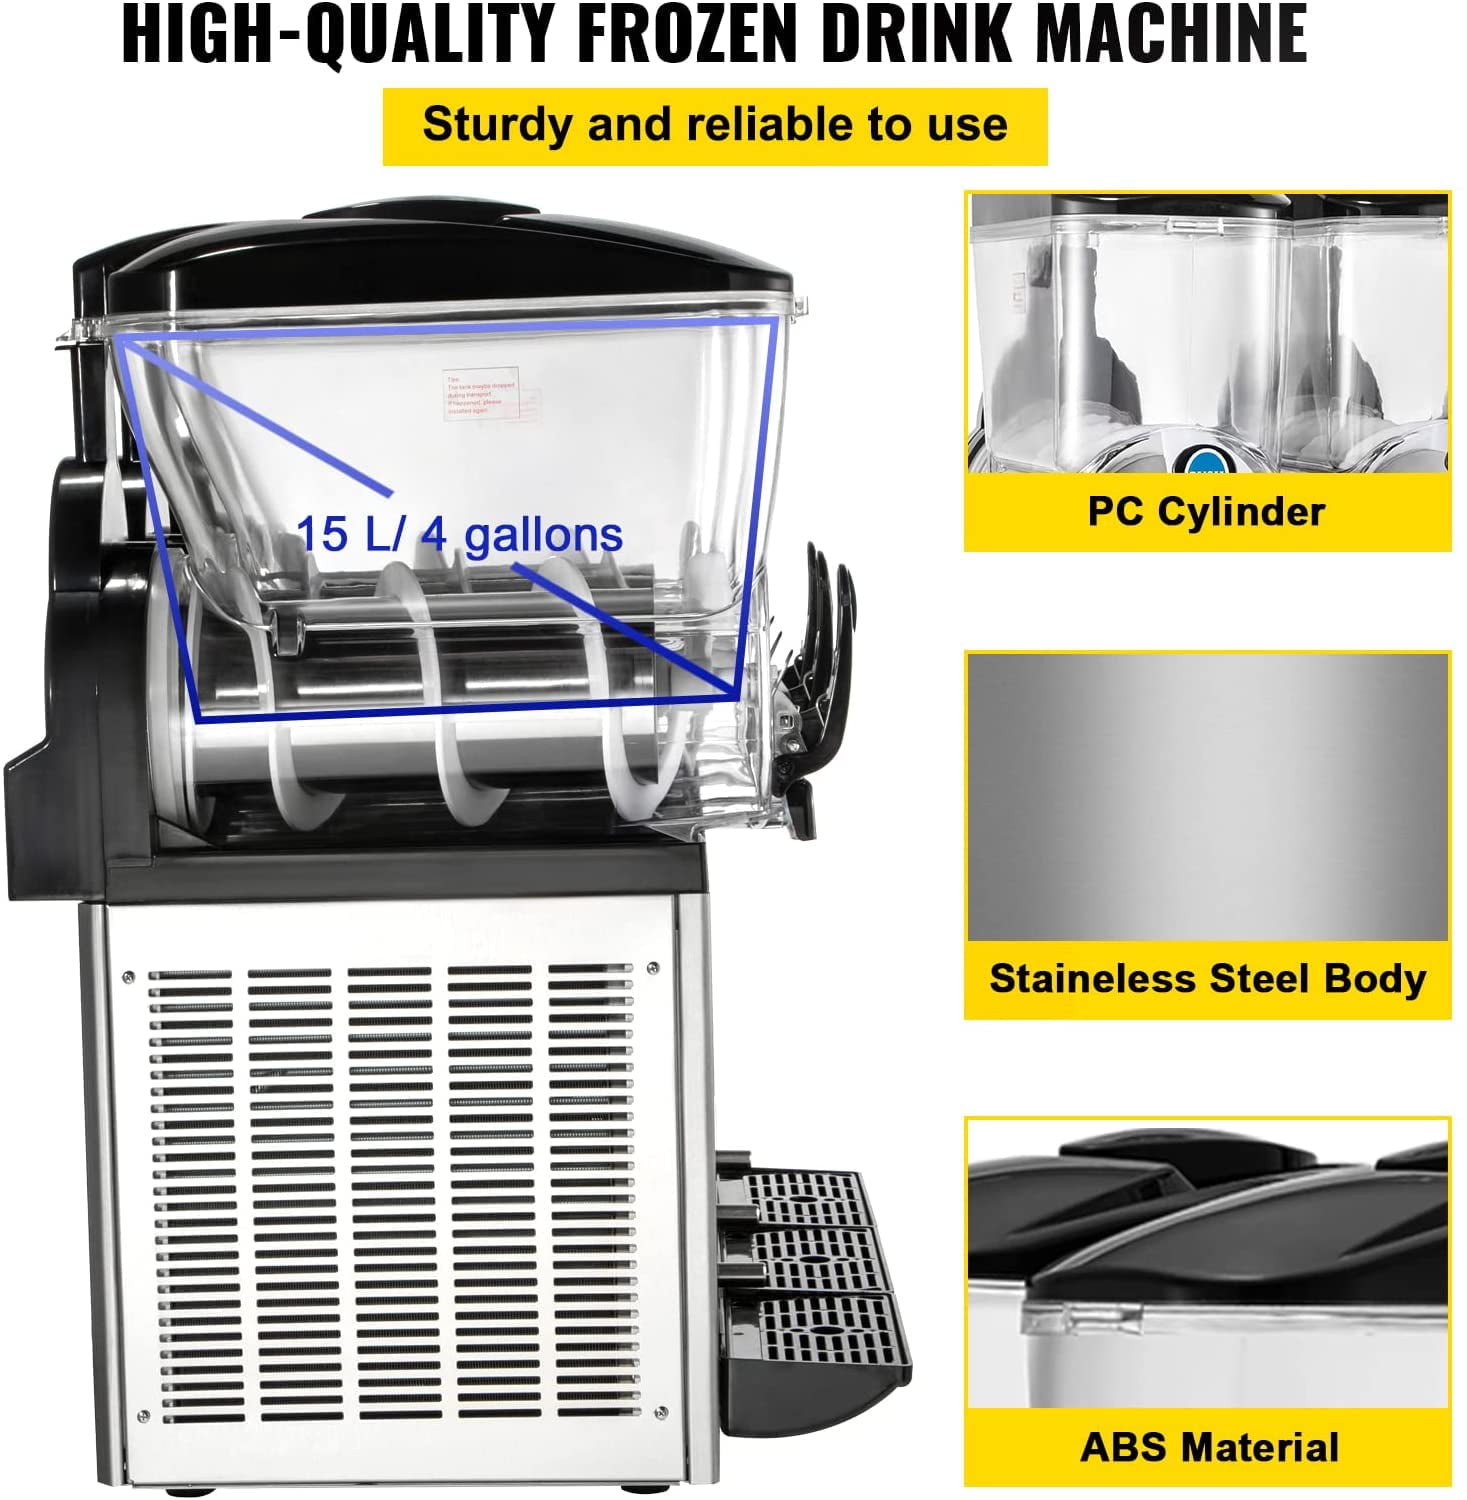 BENTISM Commercial Slushy Machine, 6 L x 2 Tanks 50 Cups, 400W 110V,  Stainless Steel Margarita Smoothie Frozen Drink Maker, Slushie Machine  Perfect